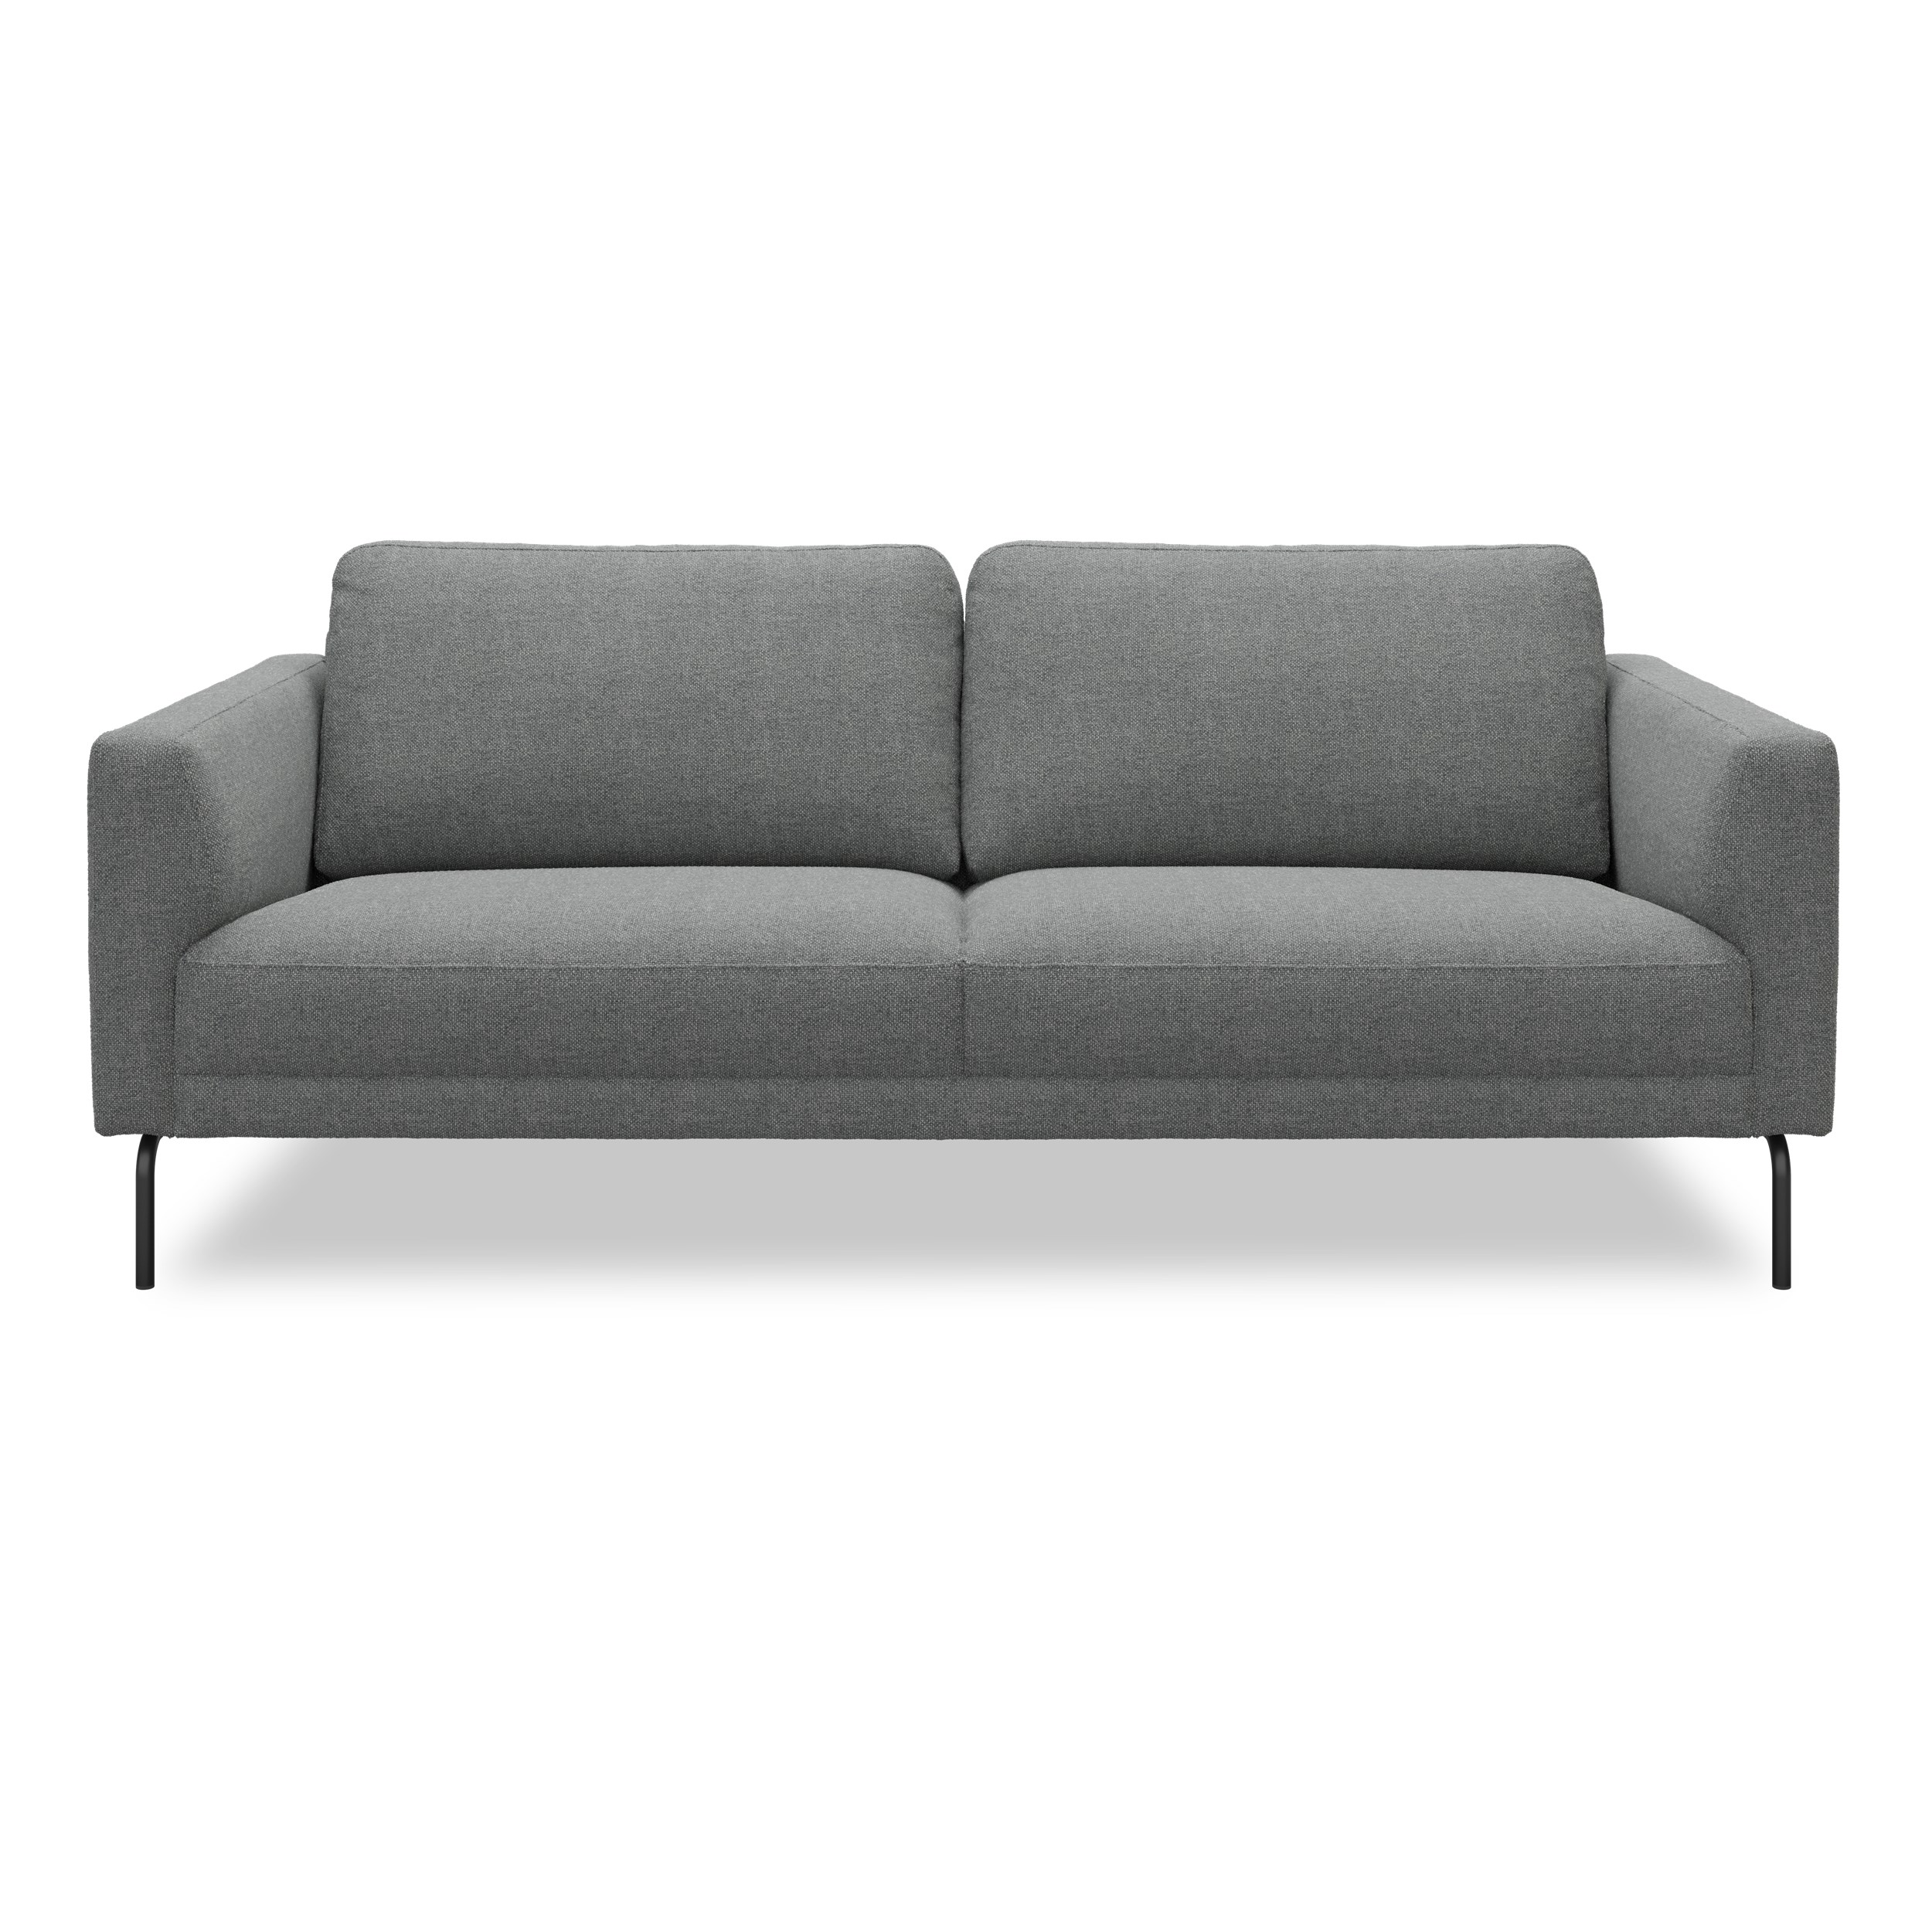 Springfield 3 pers Sofa - Rate 167 Zinc stof og ben i sort metal